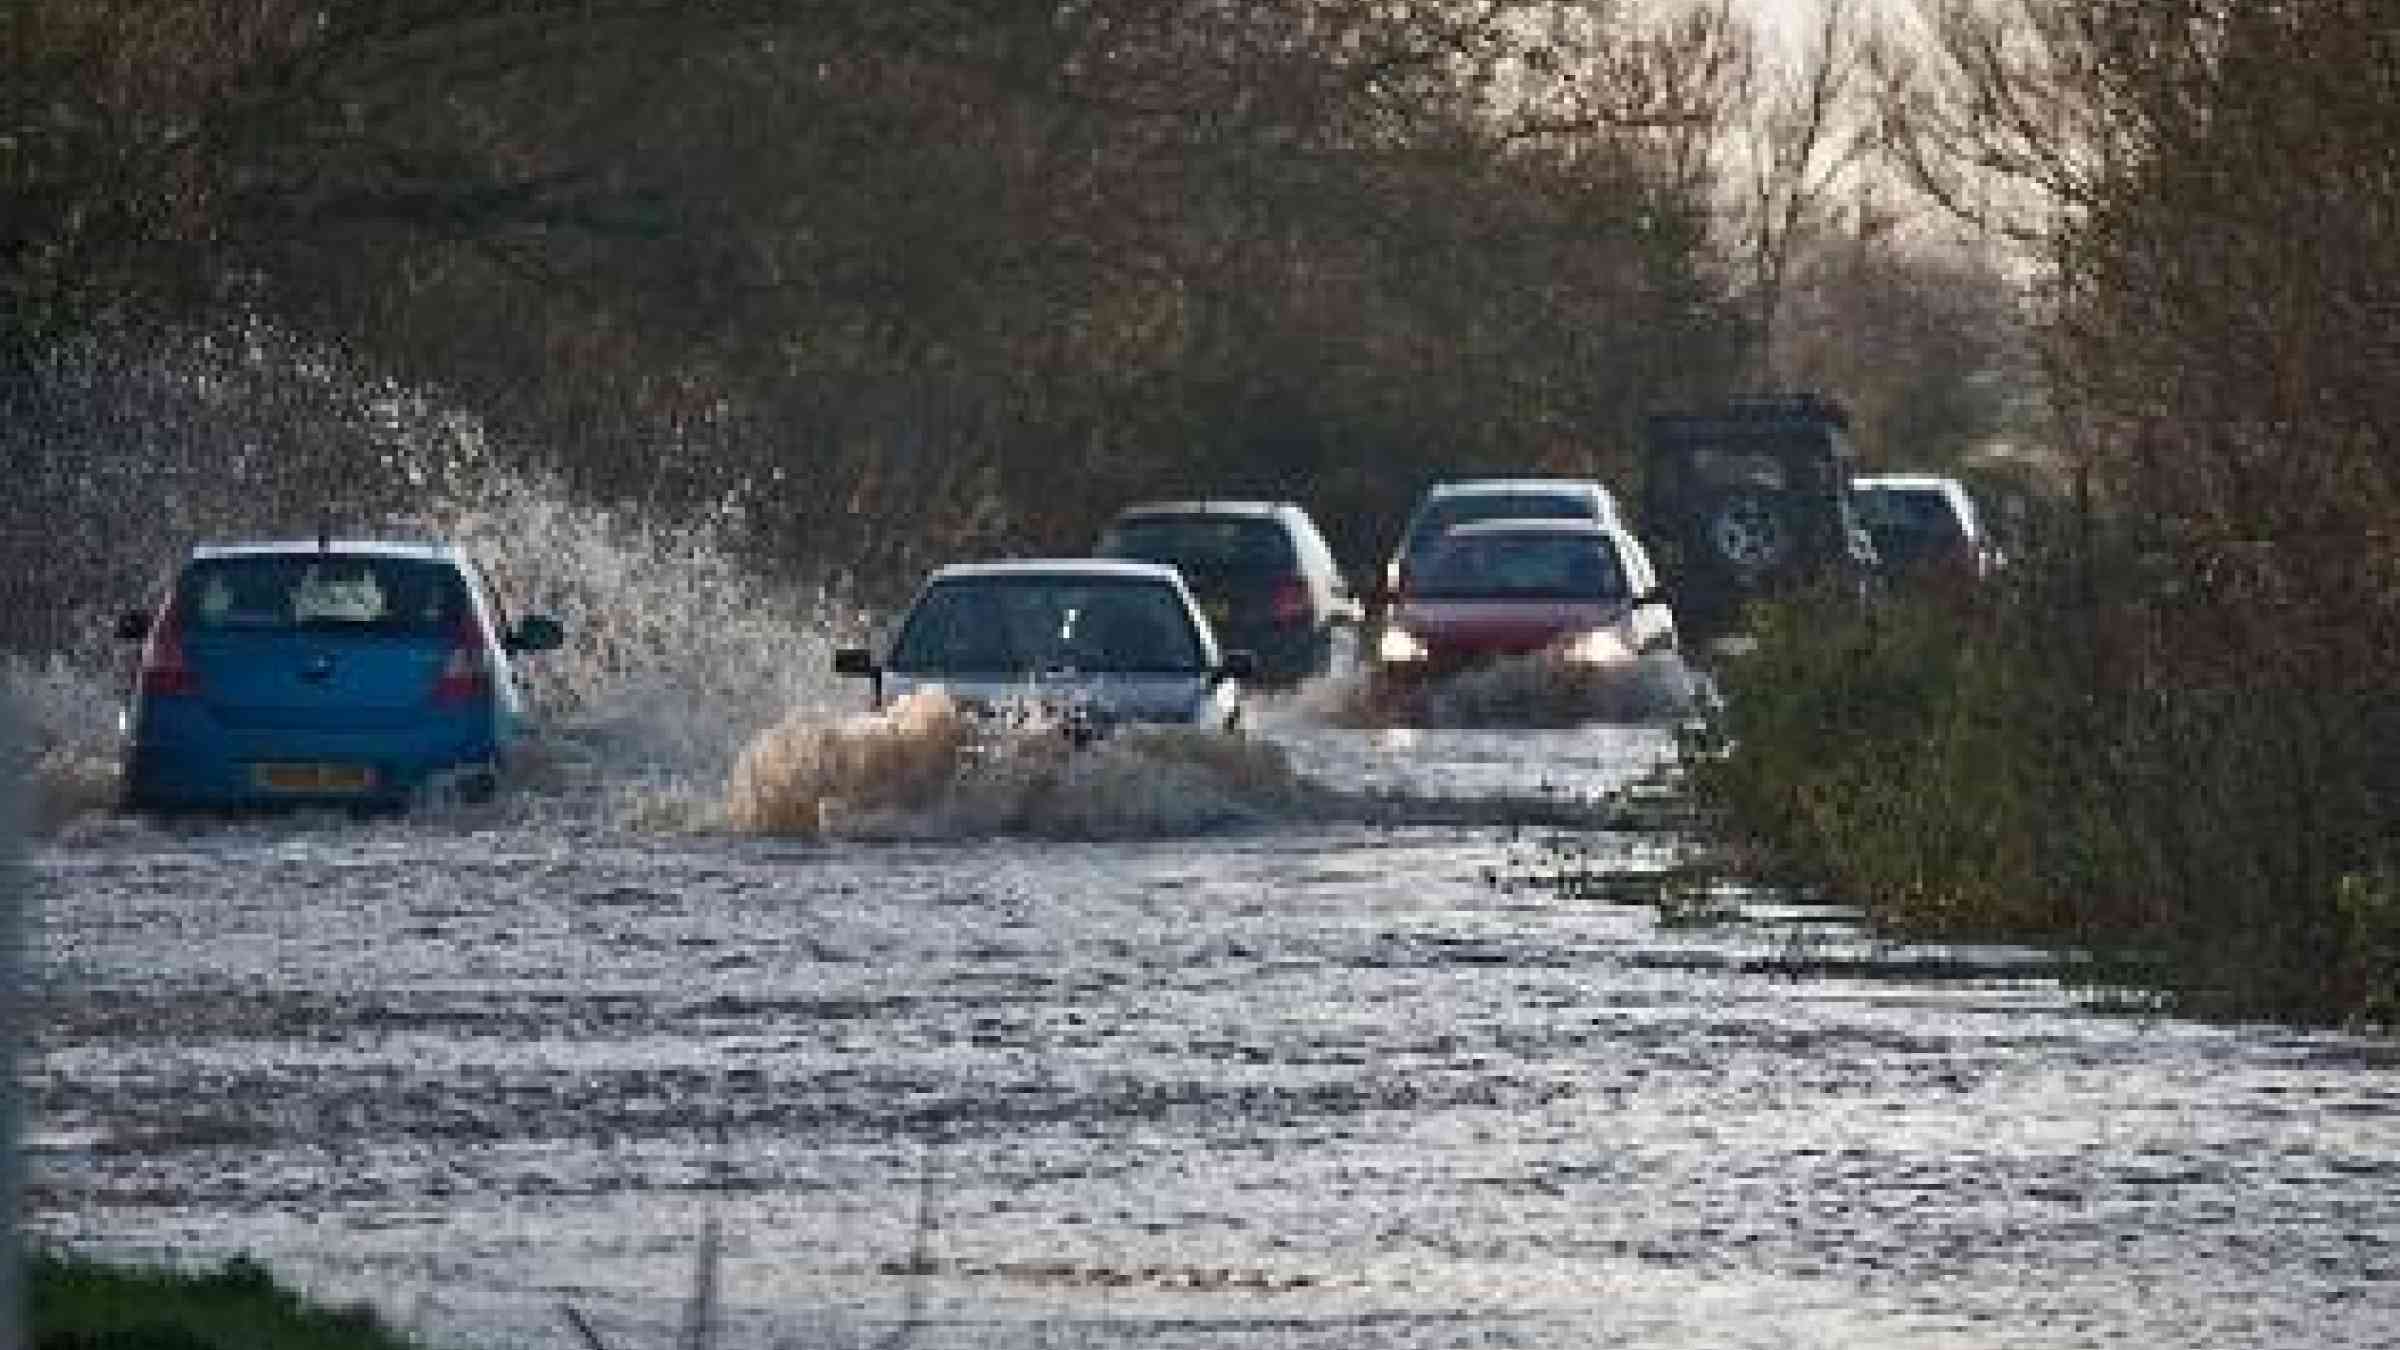 A flooded road road near Glastonbury, UK in 2012 (Photo CC Flickr: Mark Robinson)